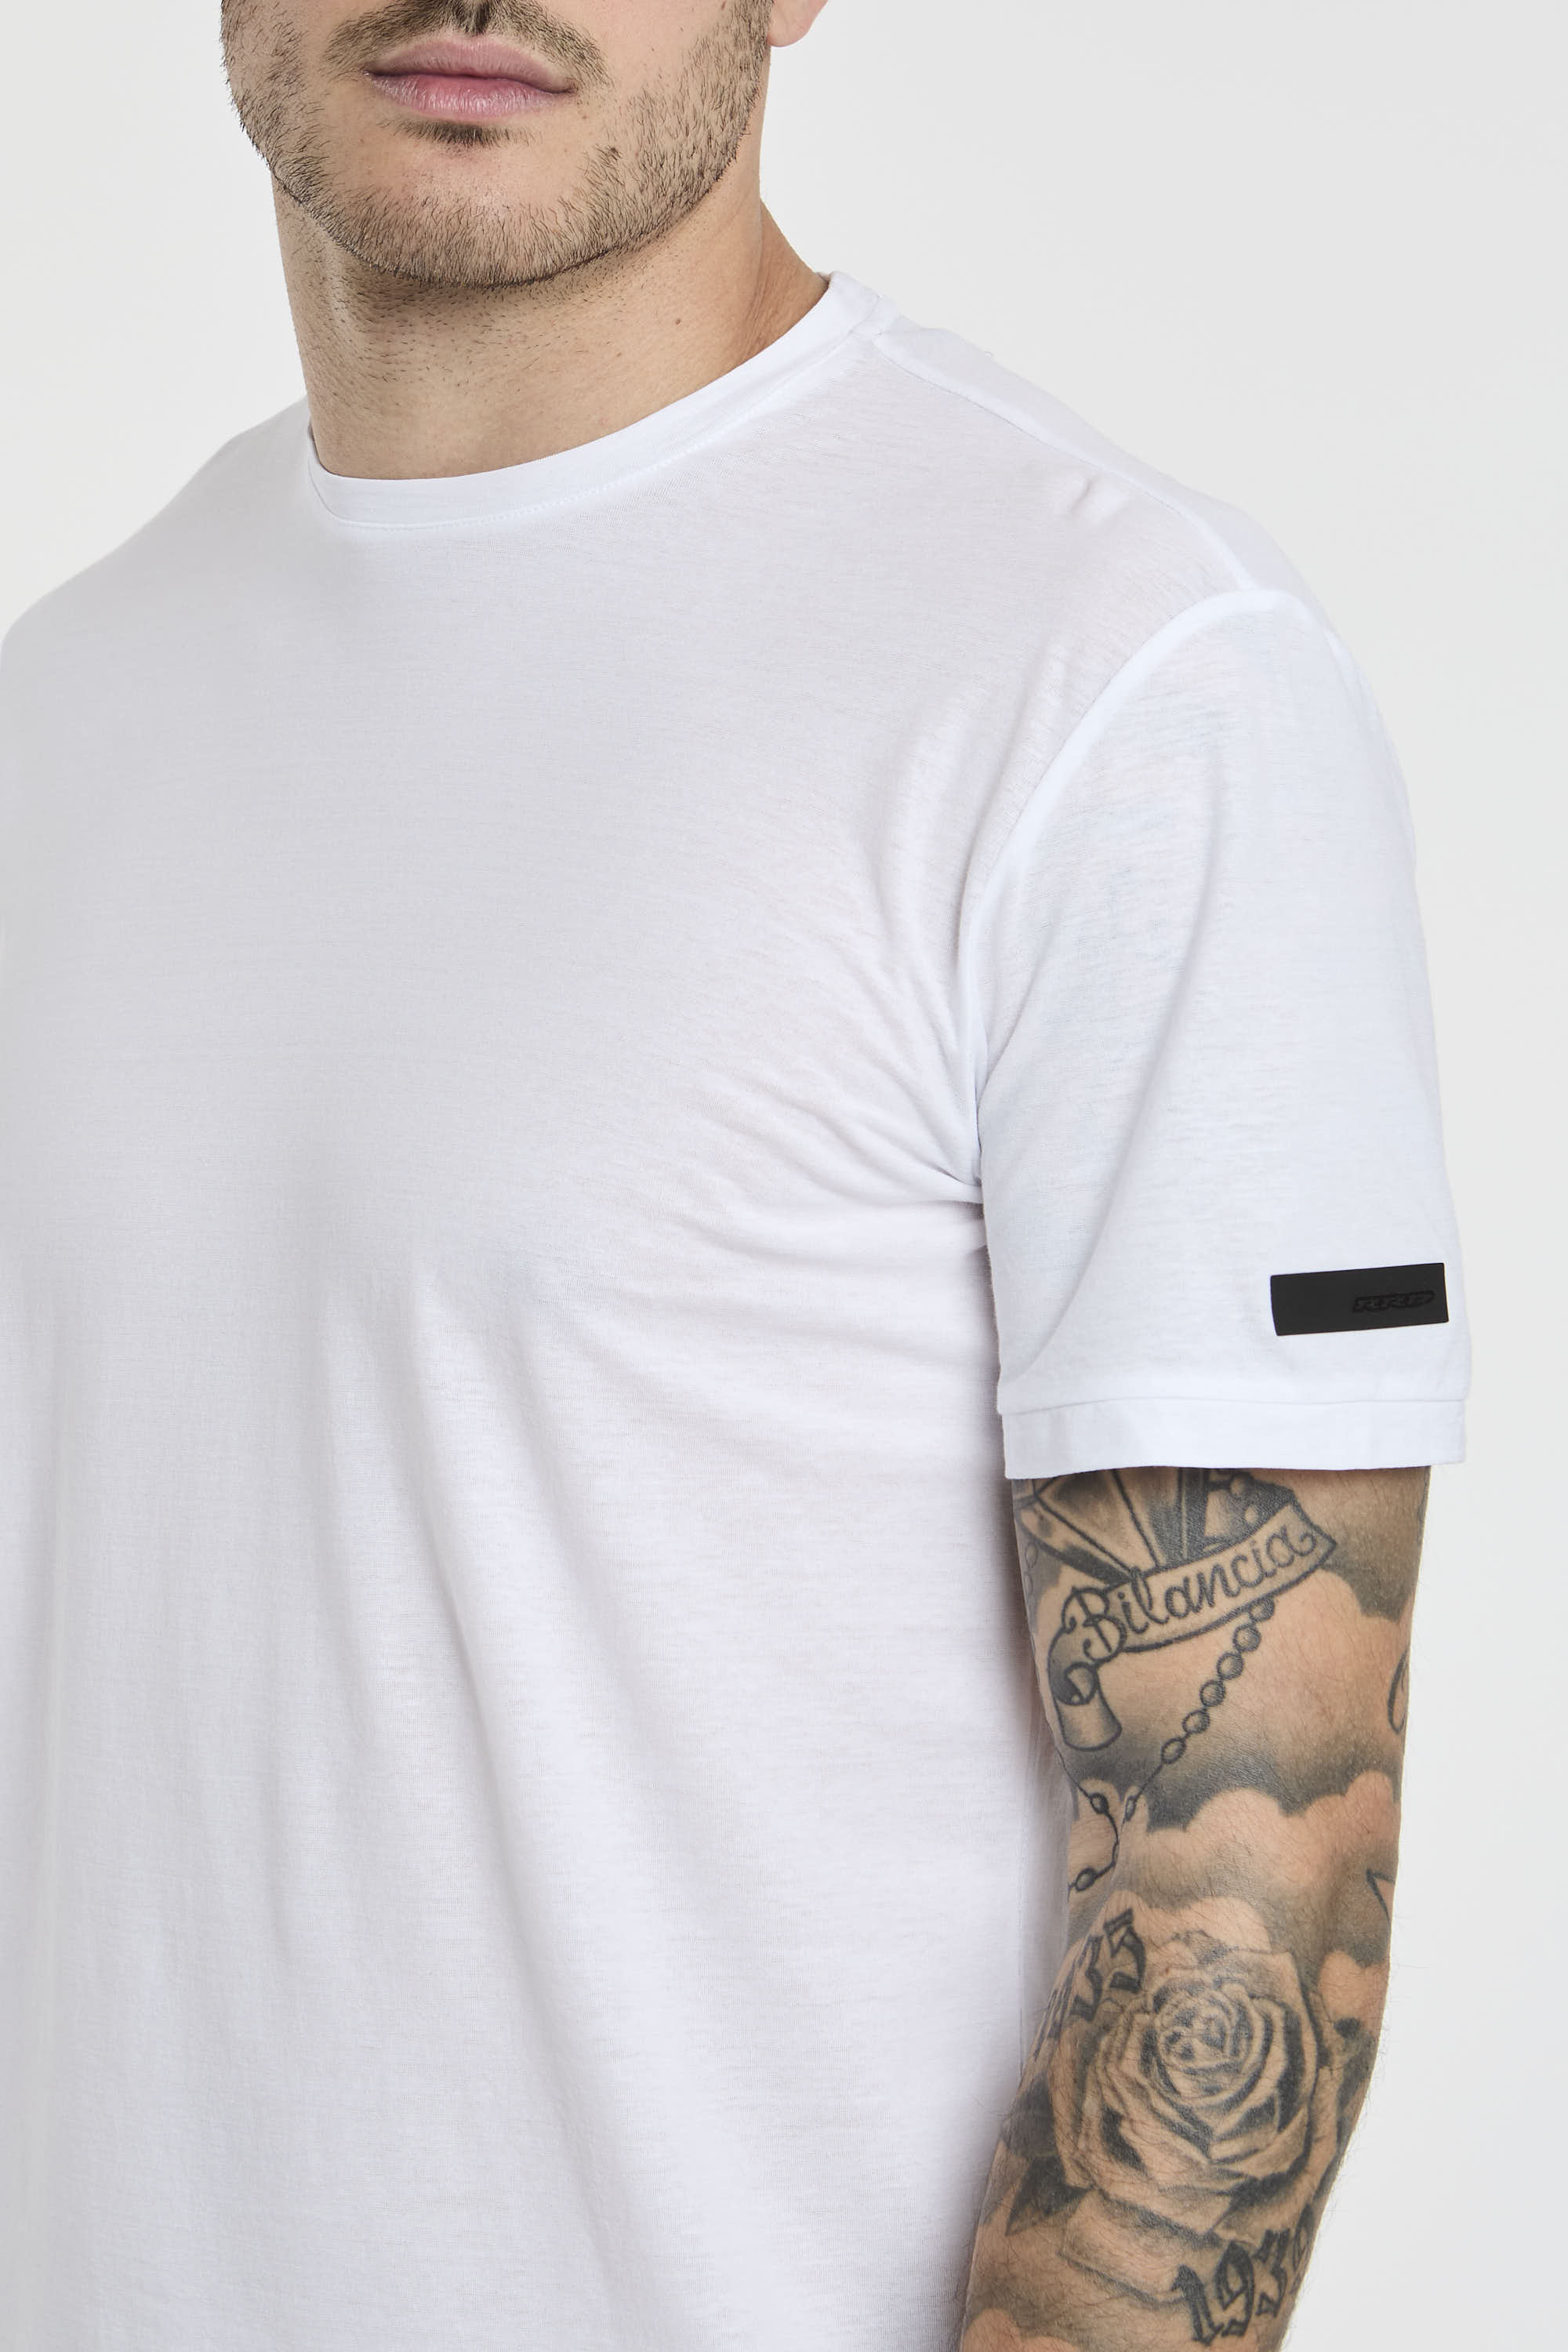 RRD T-Shirt Crepe Shirty Baumwolle Weiß-4